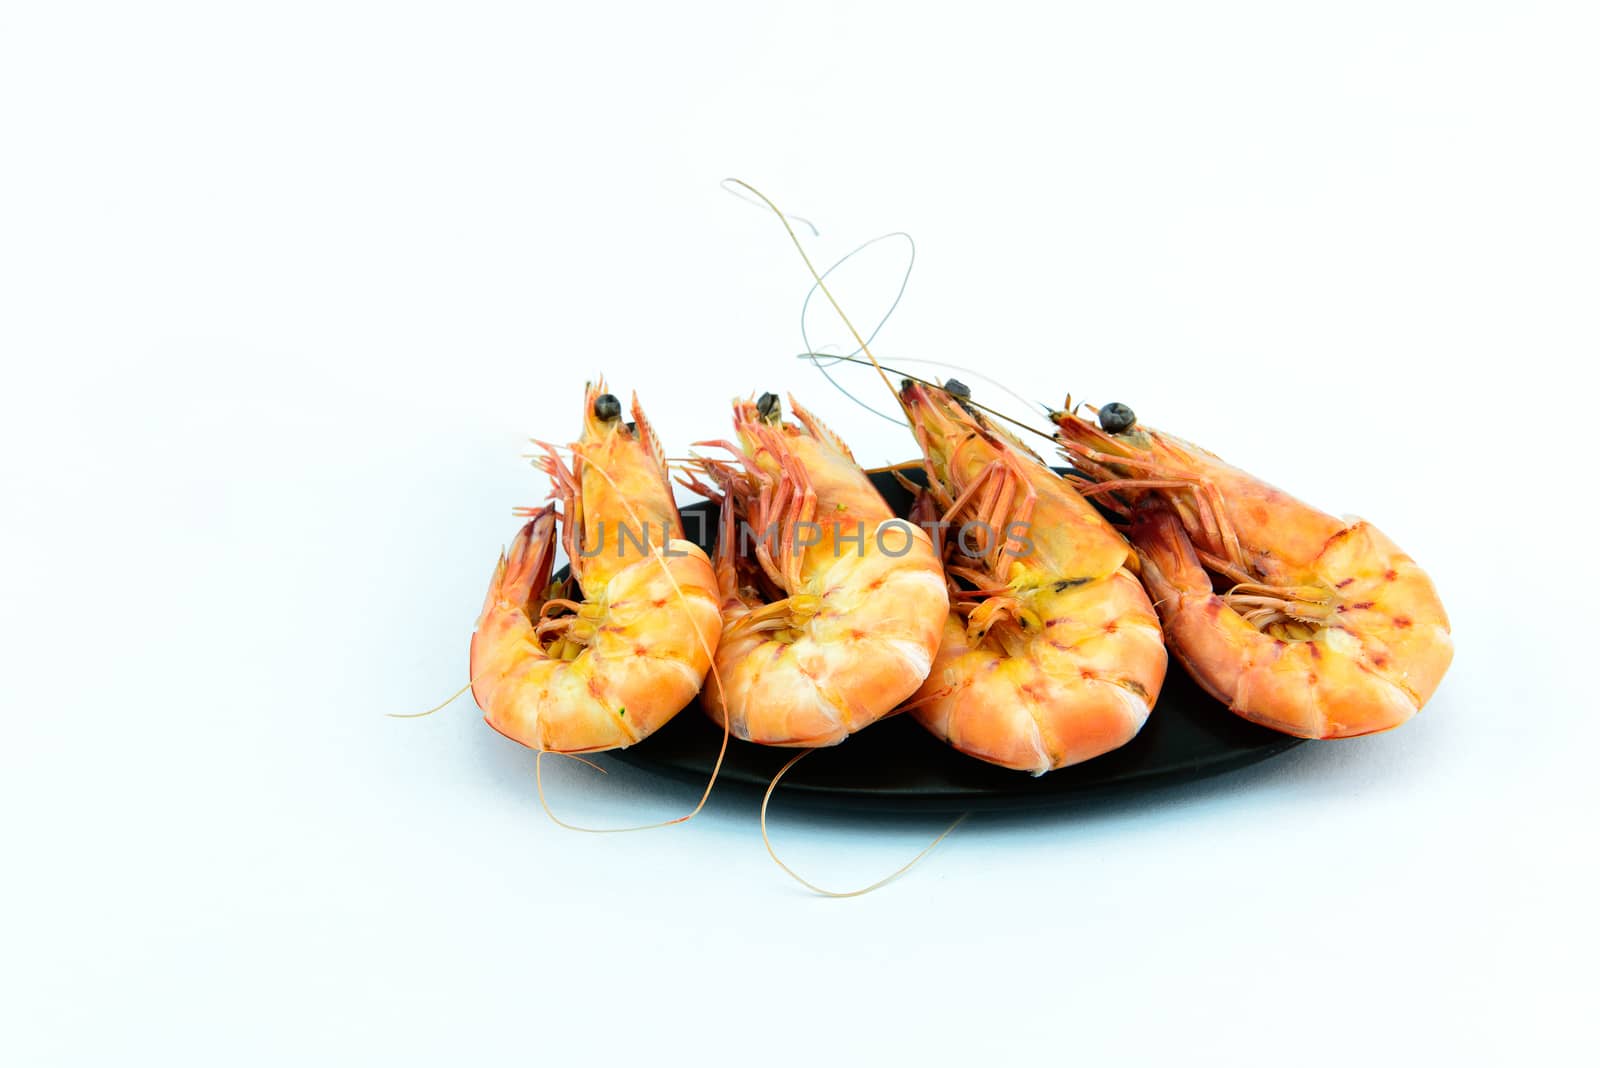 Boiled shrimp and black plate on white background by YingTanthawarak